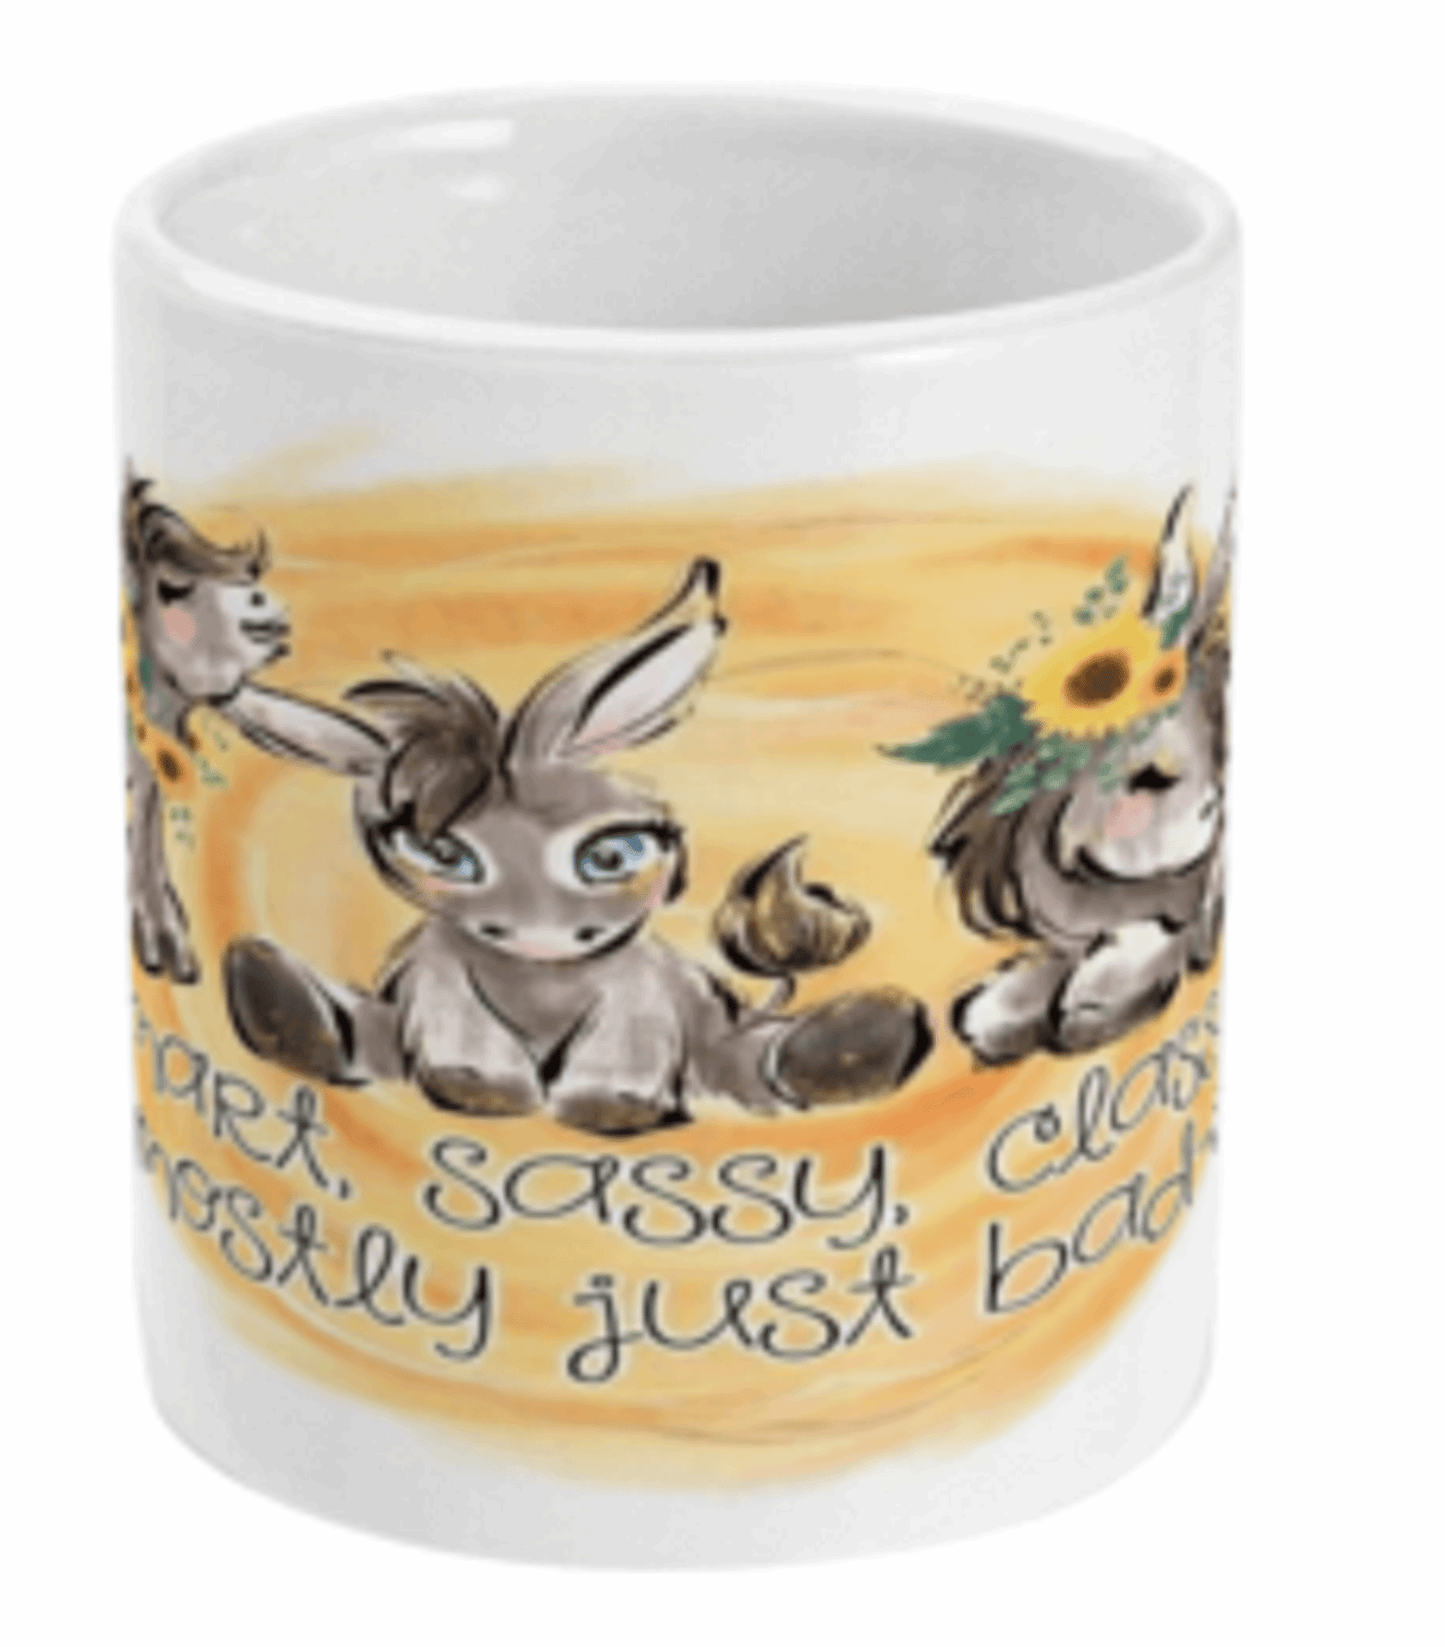  Smart Sassy and Classy Mules Coffee Mug by Free Spirit Accessories sold by Free Spirit Accessories